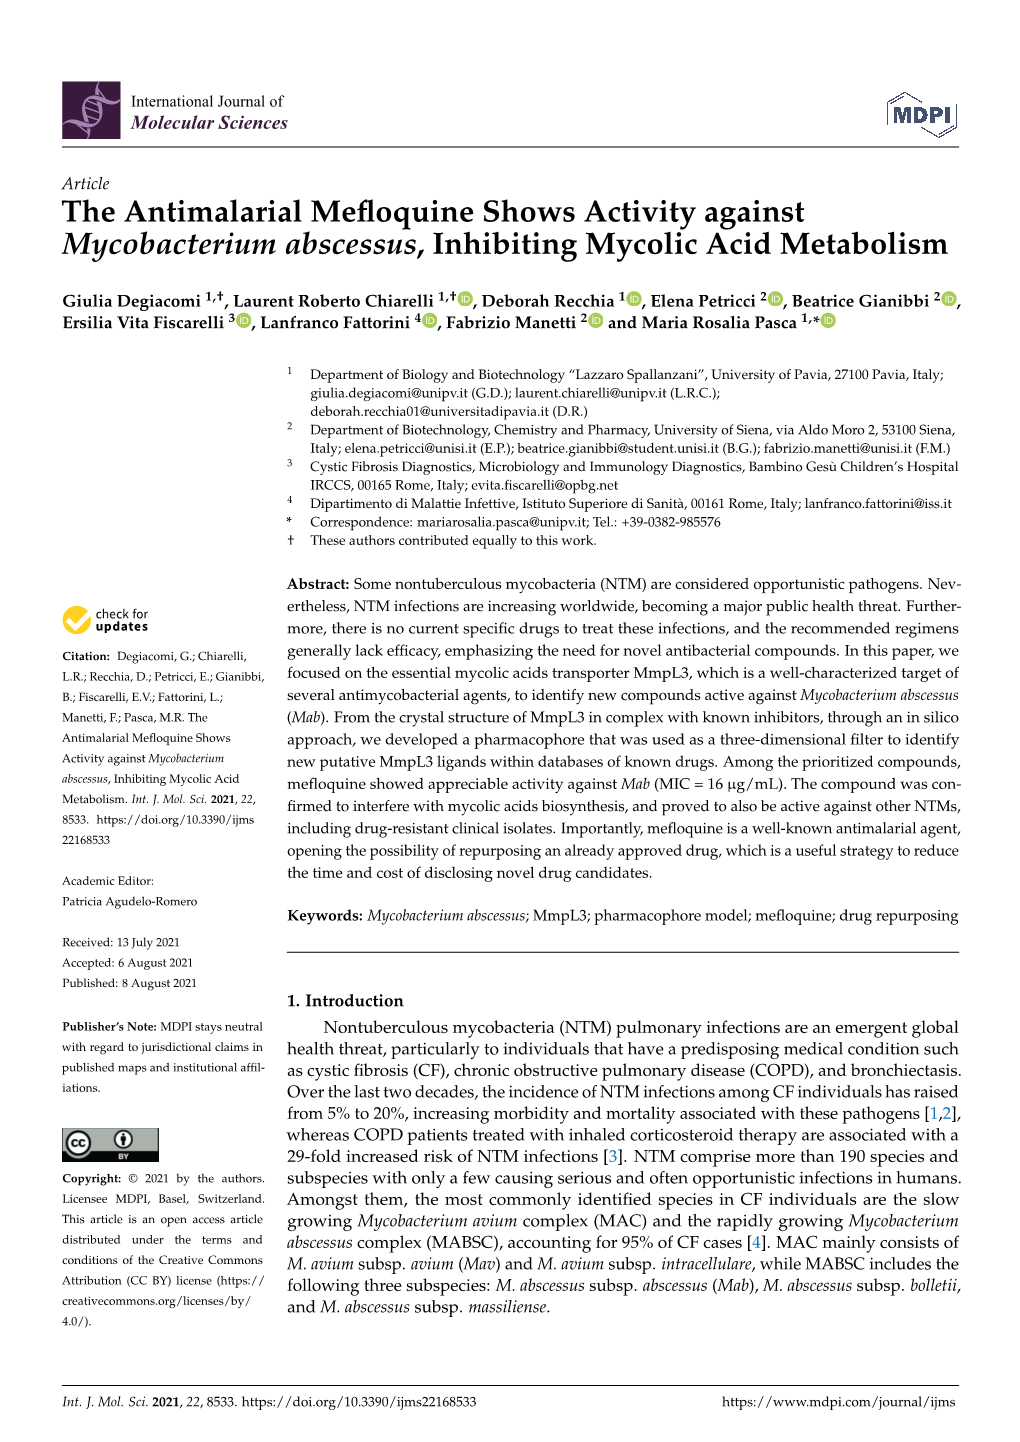 The Antimalarial Mefloquine Shows Activity Against Mycobacterium